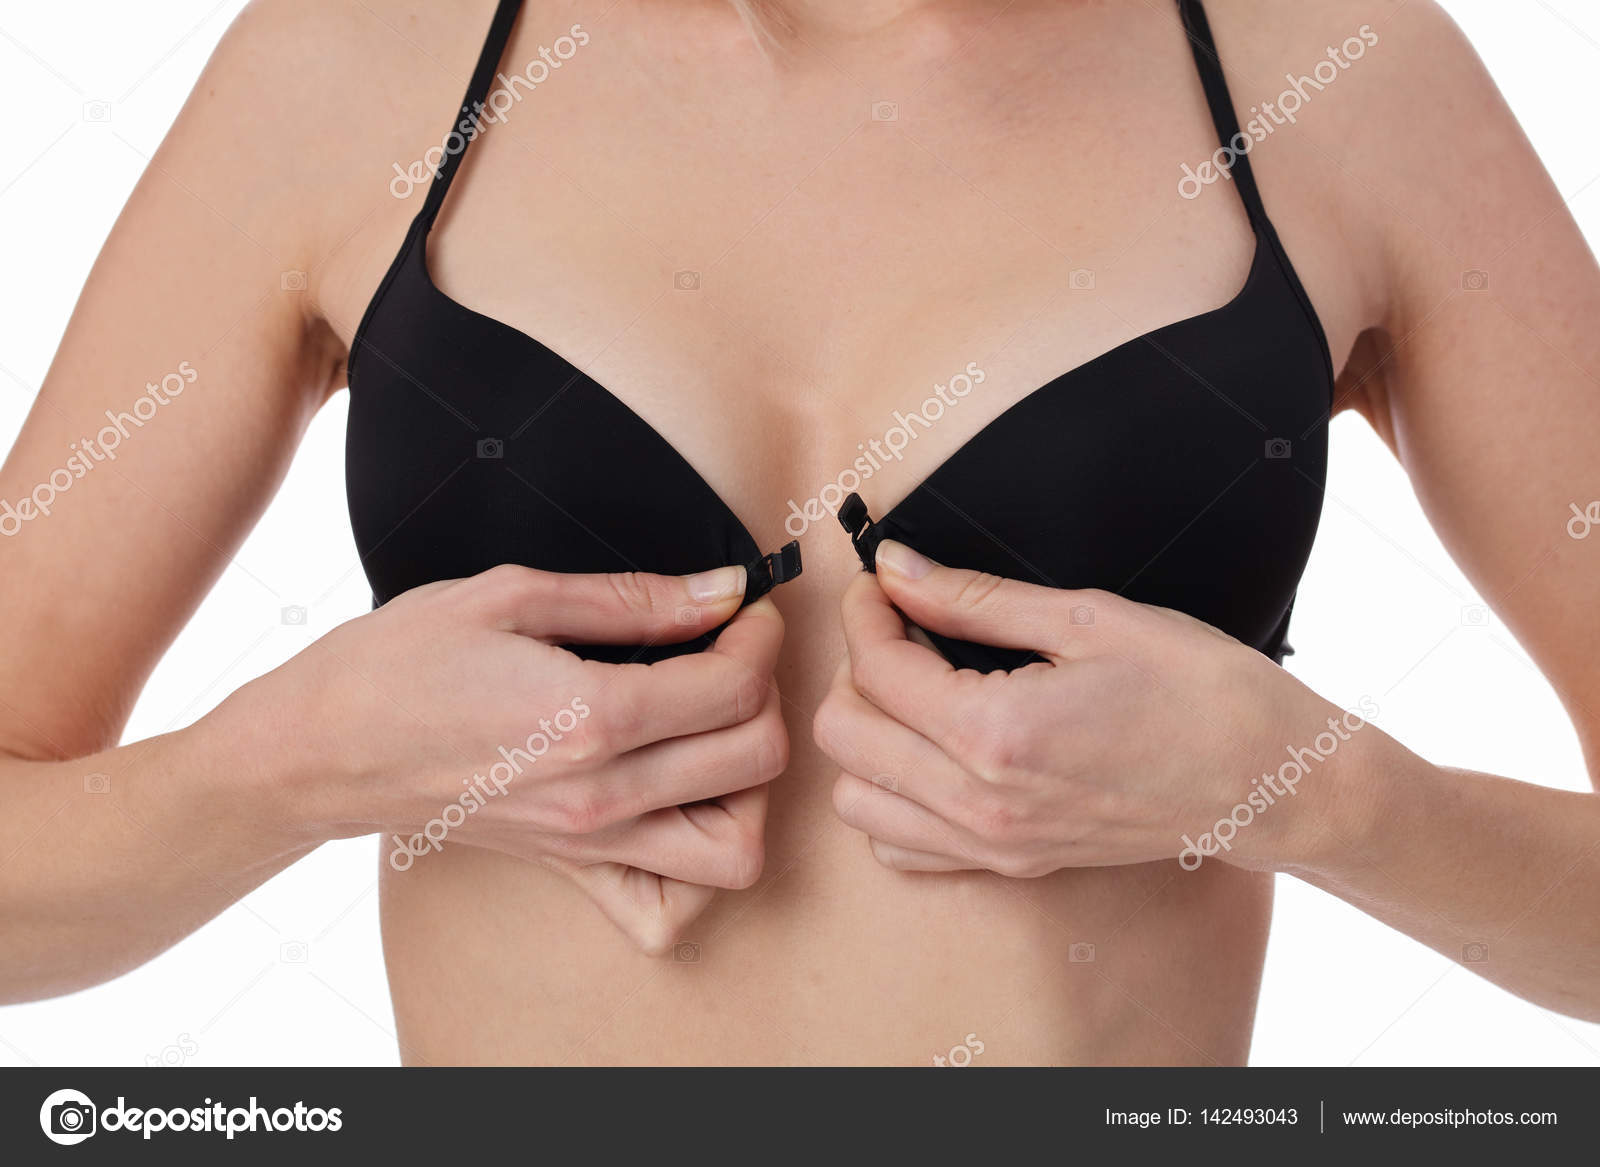 Woman taking off bra, wearing black underwear isolated on white background.